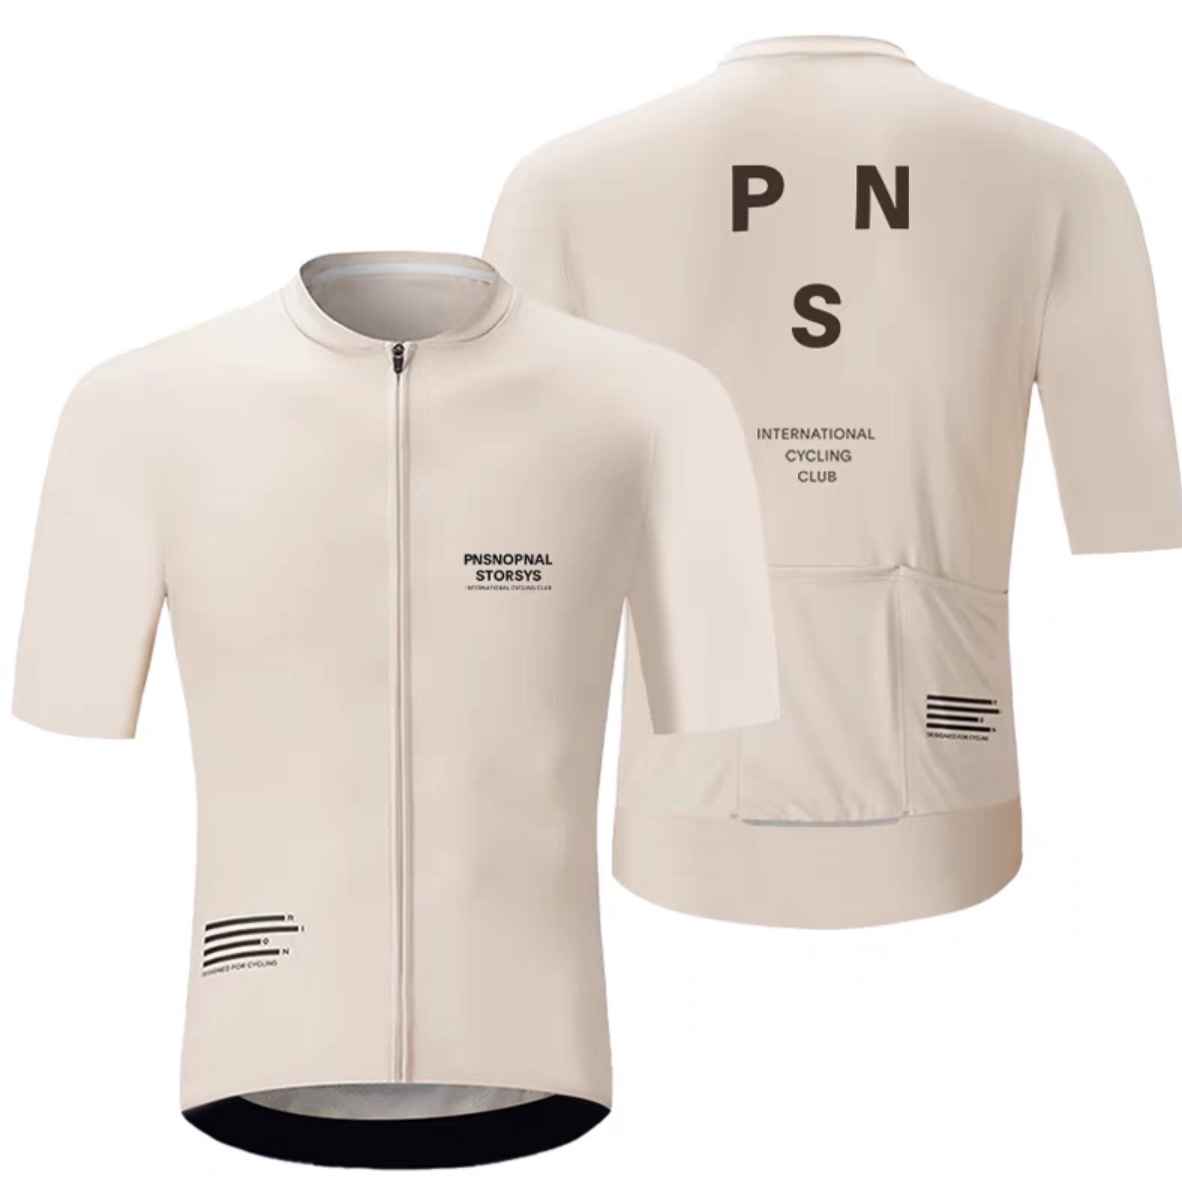 PAS  新款夏季短袖骑行服速干透气高端定制公路车自行车户外套装